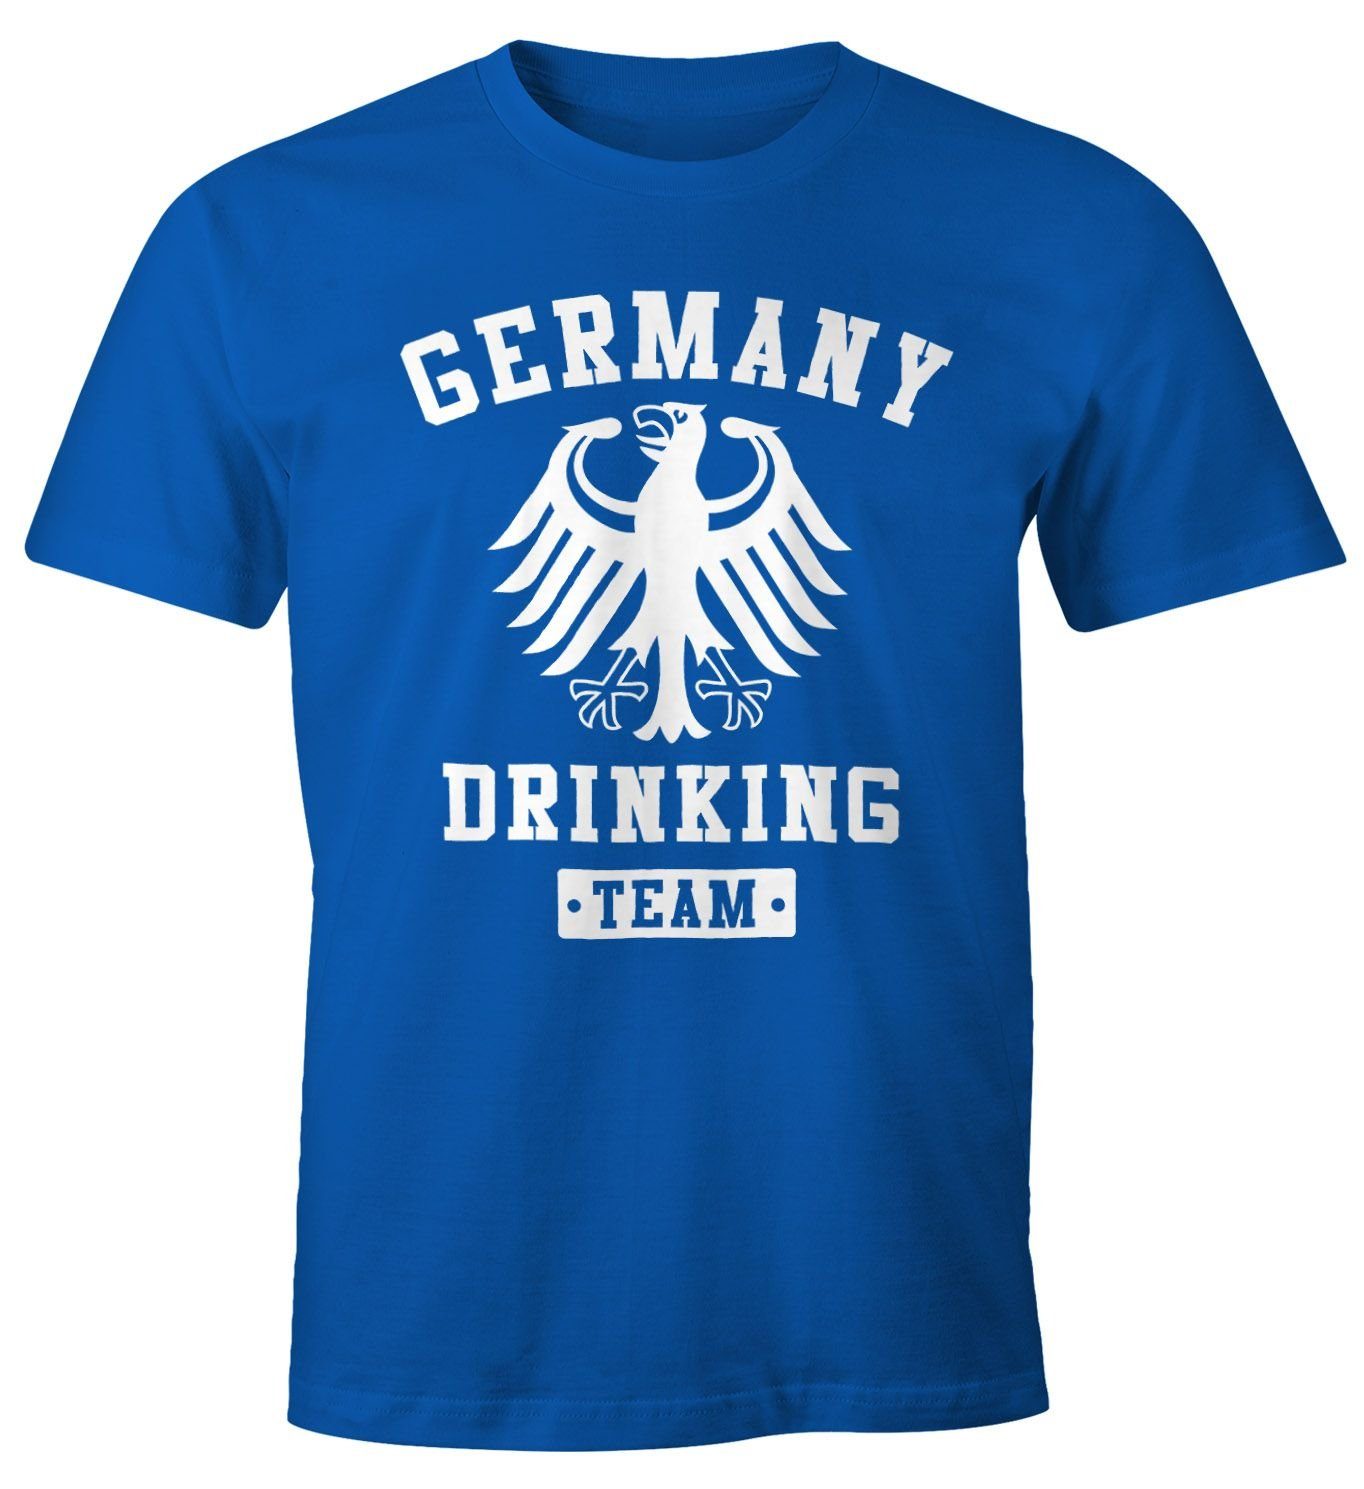 Adler mit T-Shirt Fun-Shirt Team Deutschland Herren MoonWorks Drinking Print-Shirt blau Moonworks® Bier Print Germany